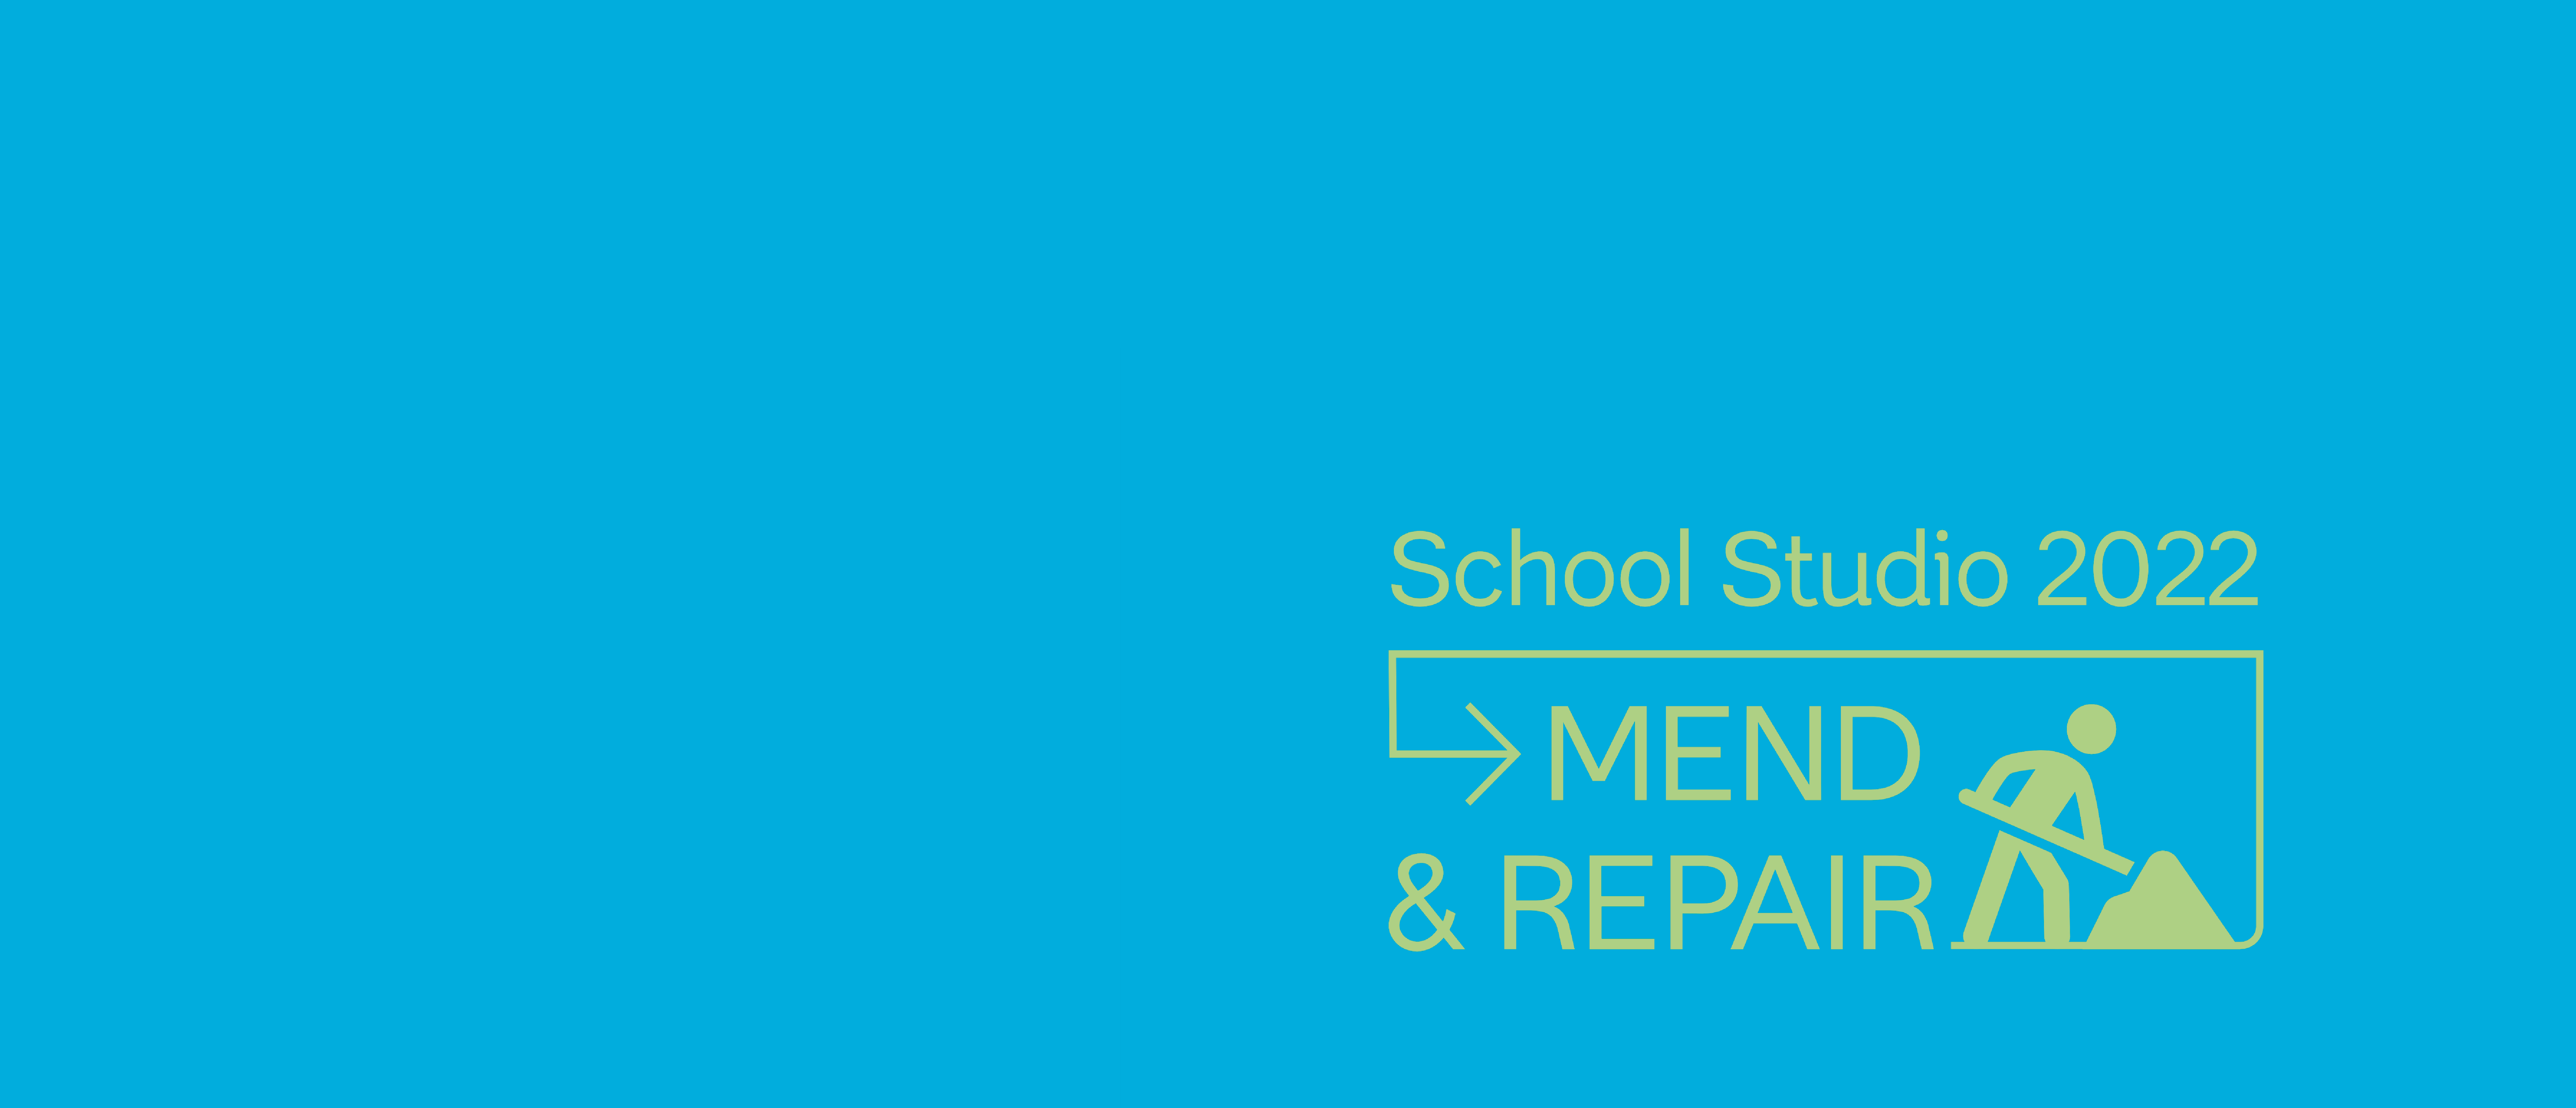 School Studio Mend & Repair Project logo